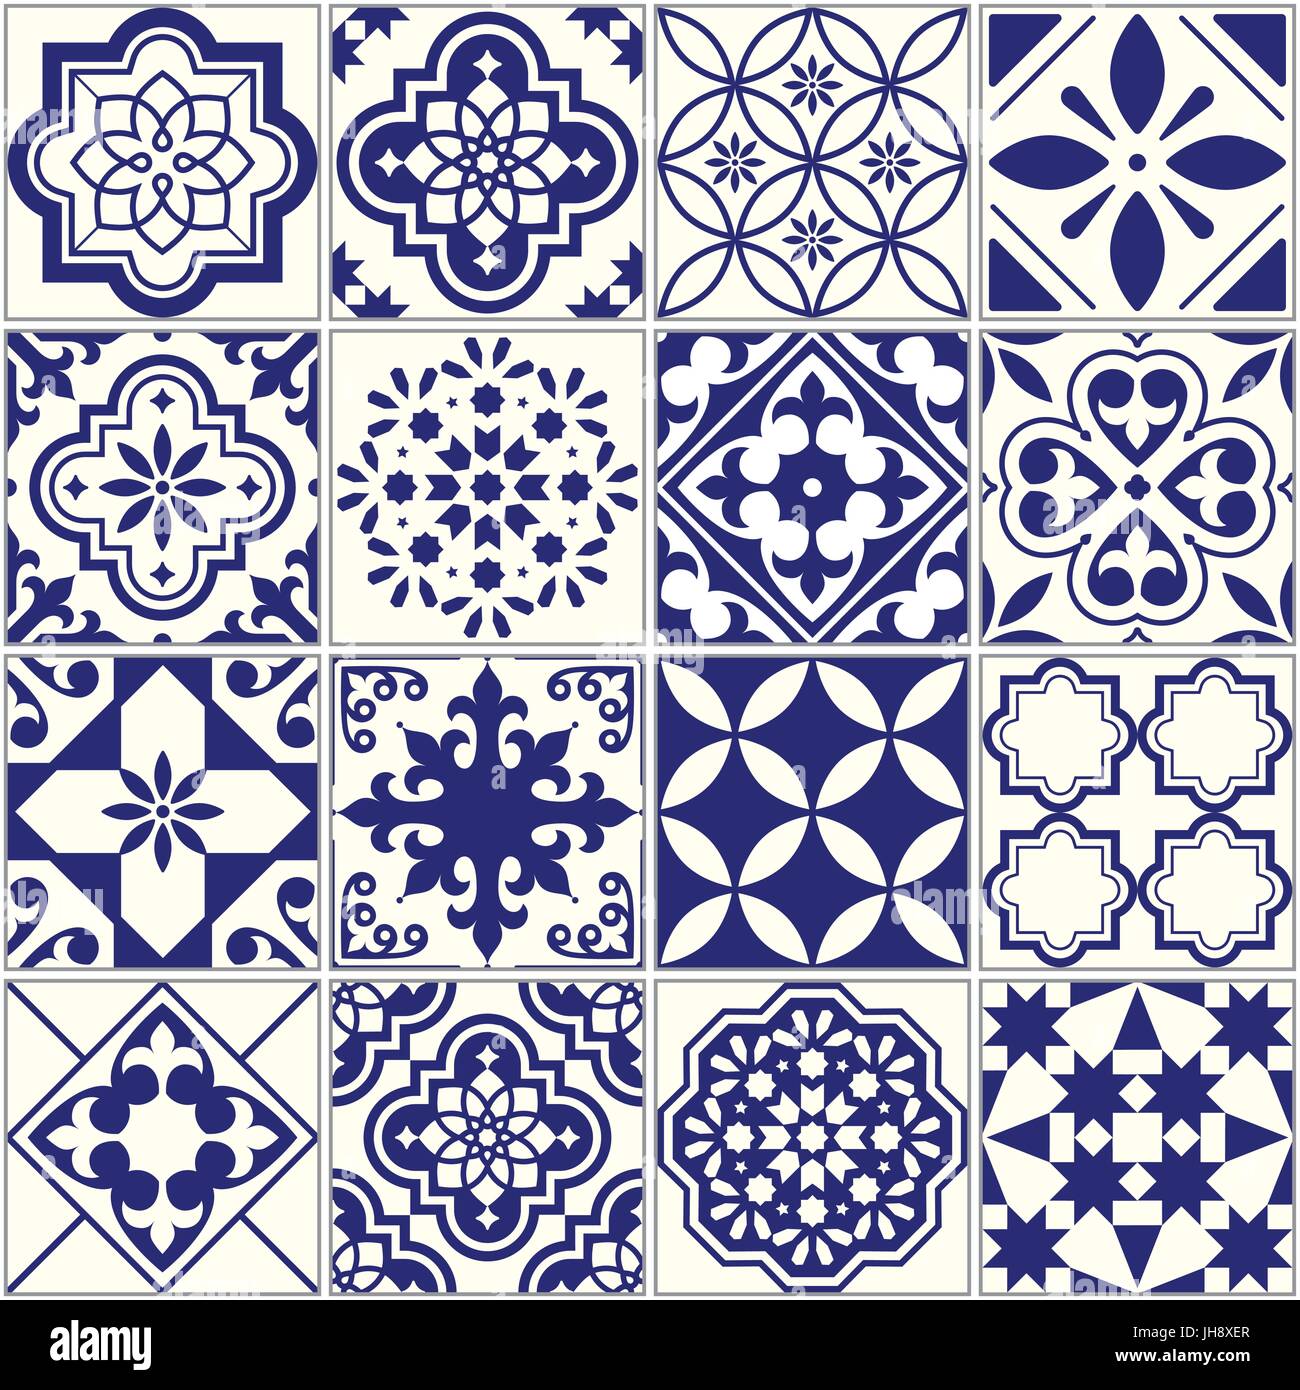 Nahtlose Kacheln Muster, mediterrane Blumen Mosaik Set Lissabon nahtlose Marineblau ornament Stock Vektor